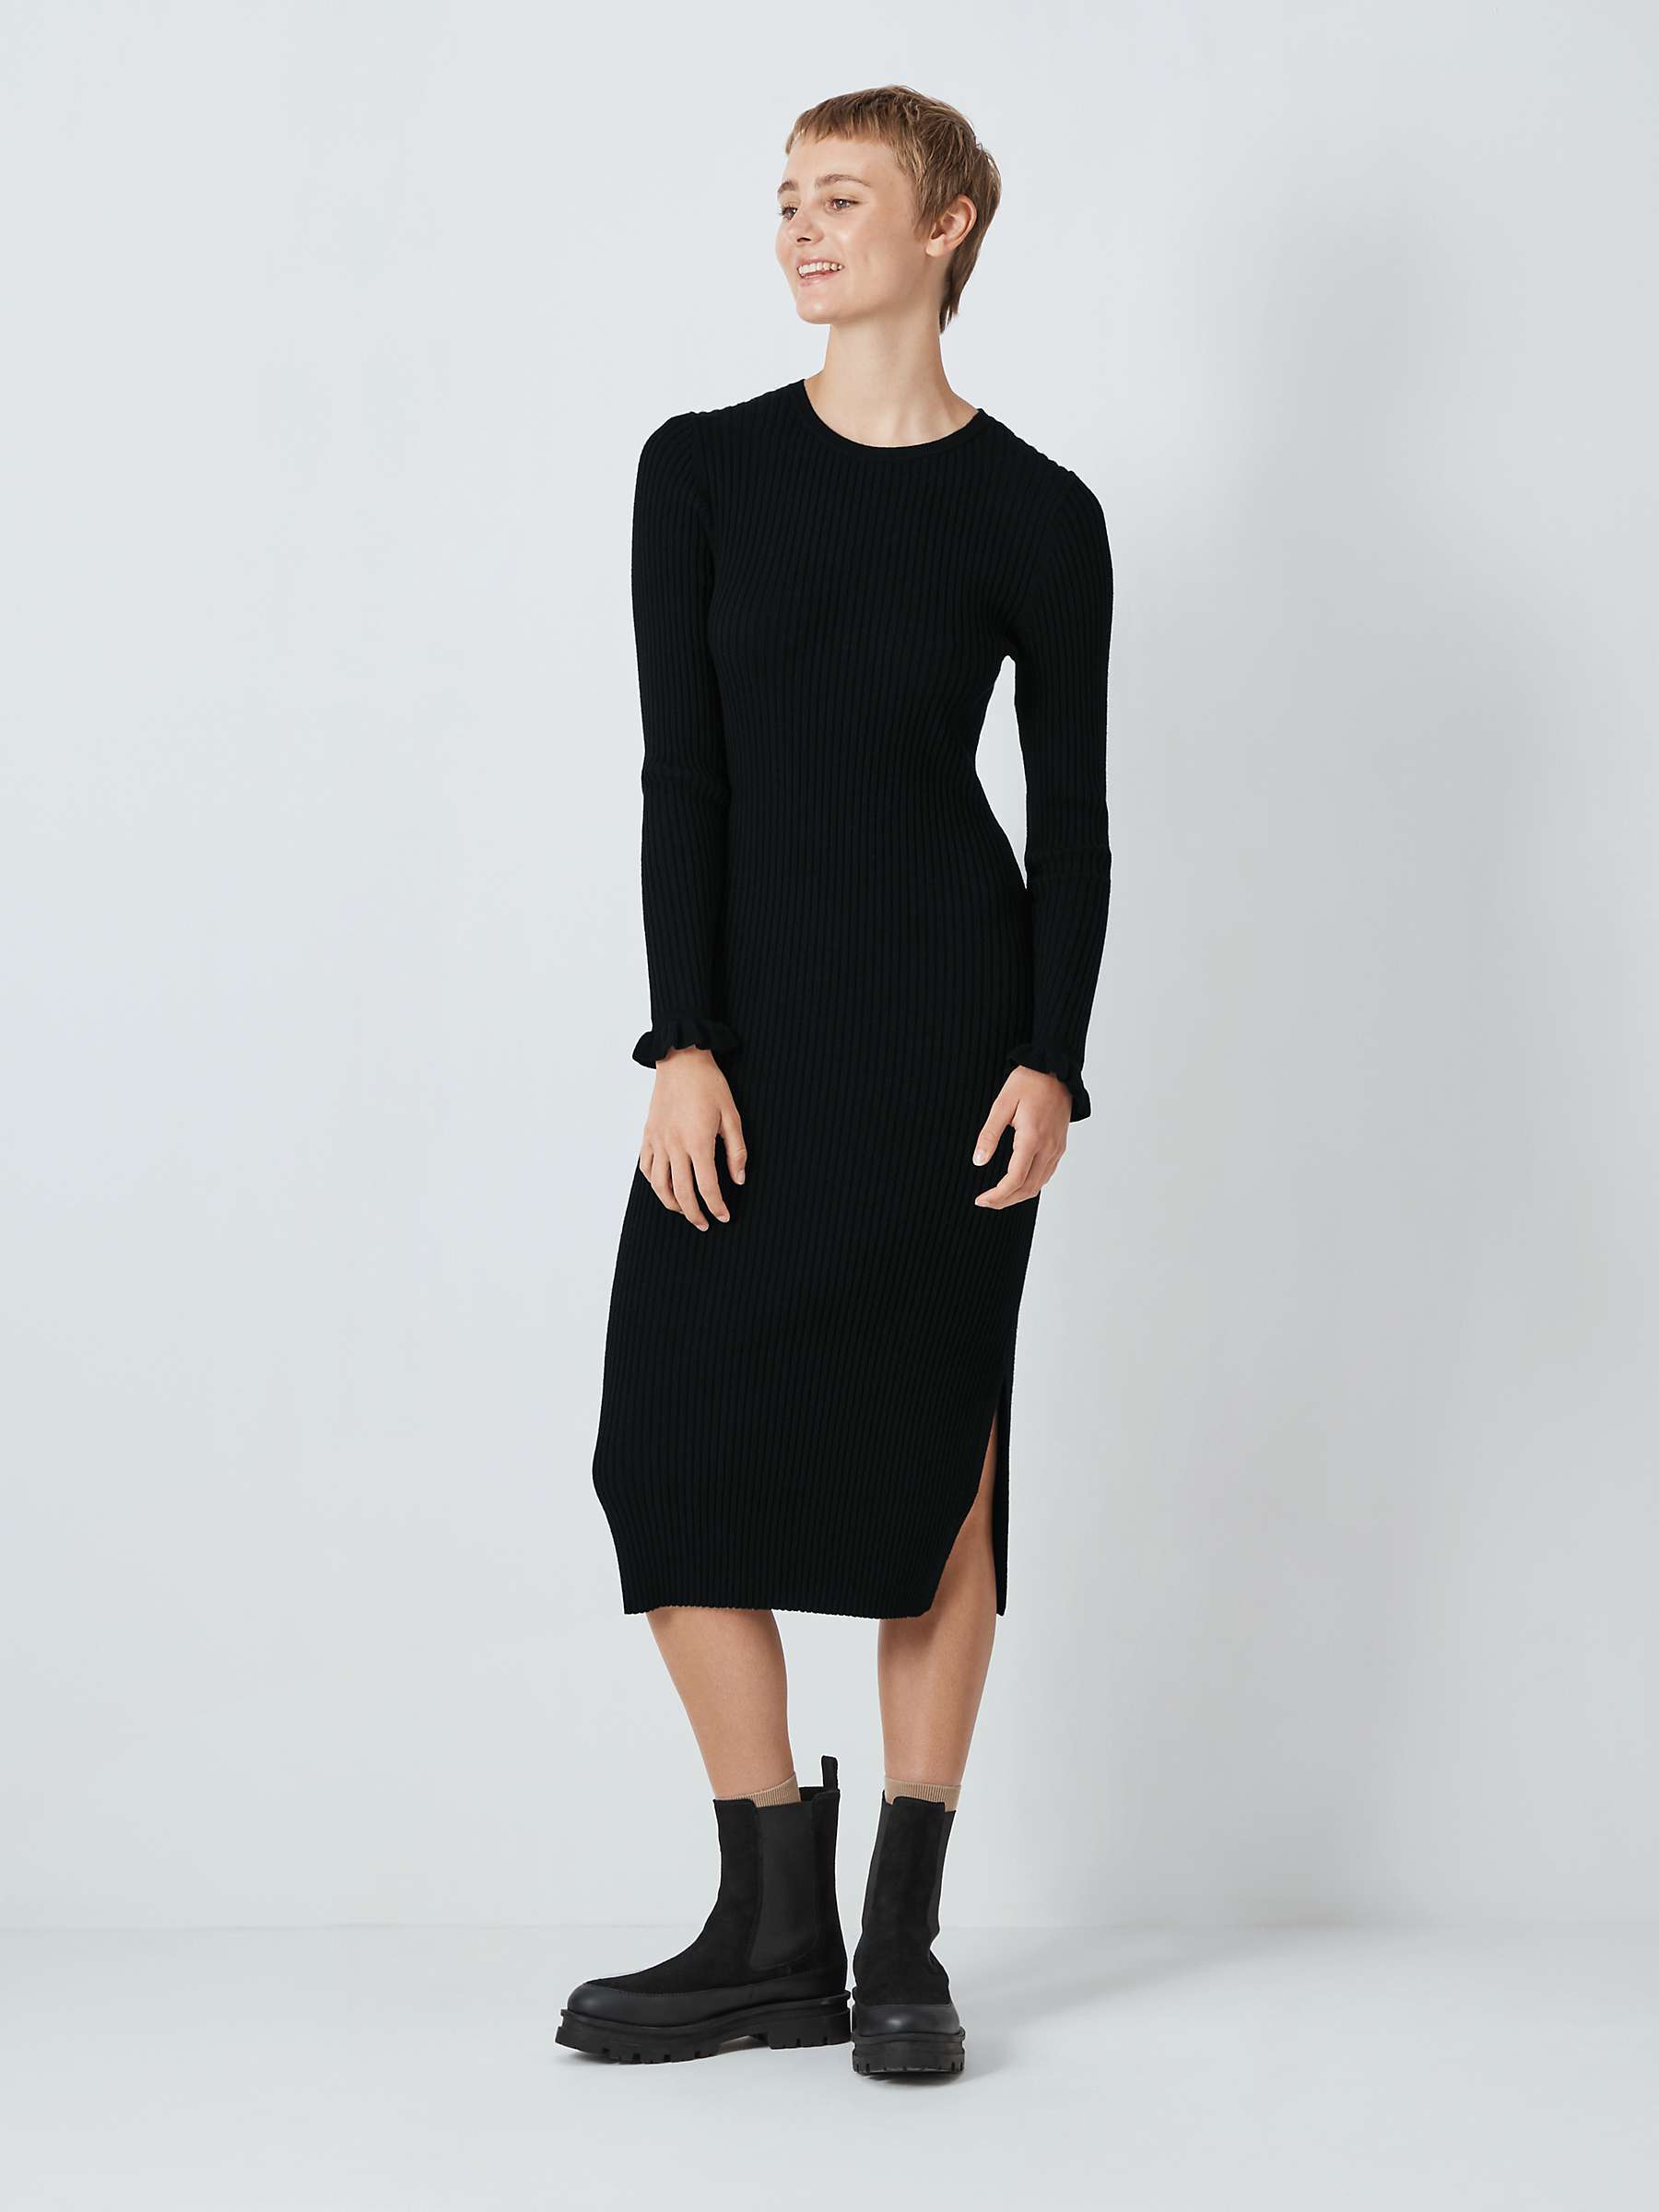 John Lewis ANYDAY Plain Ribbed Knit Dress, Black at John Lewis & Partners